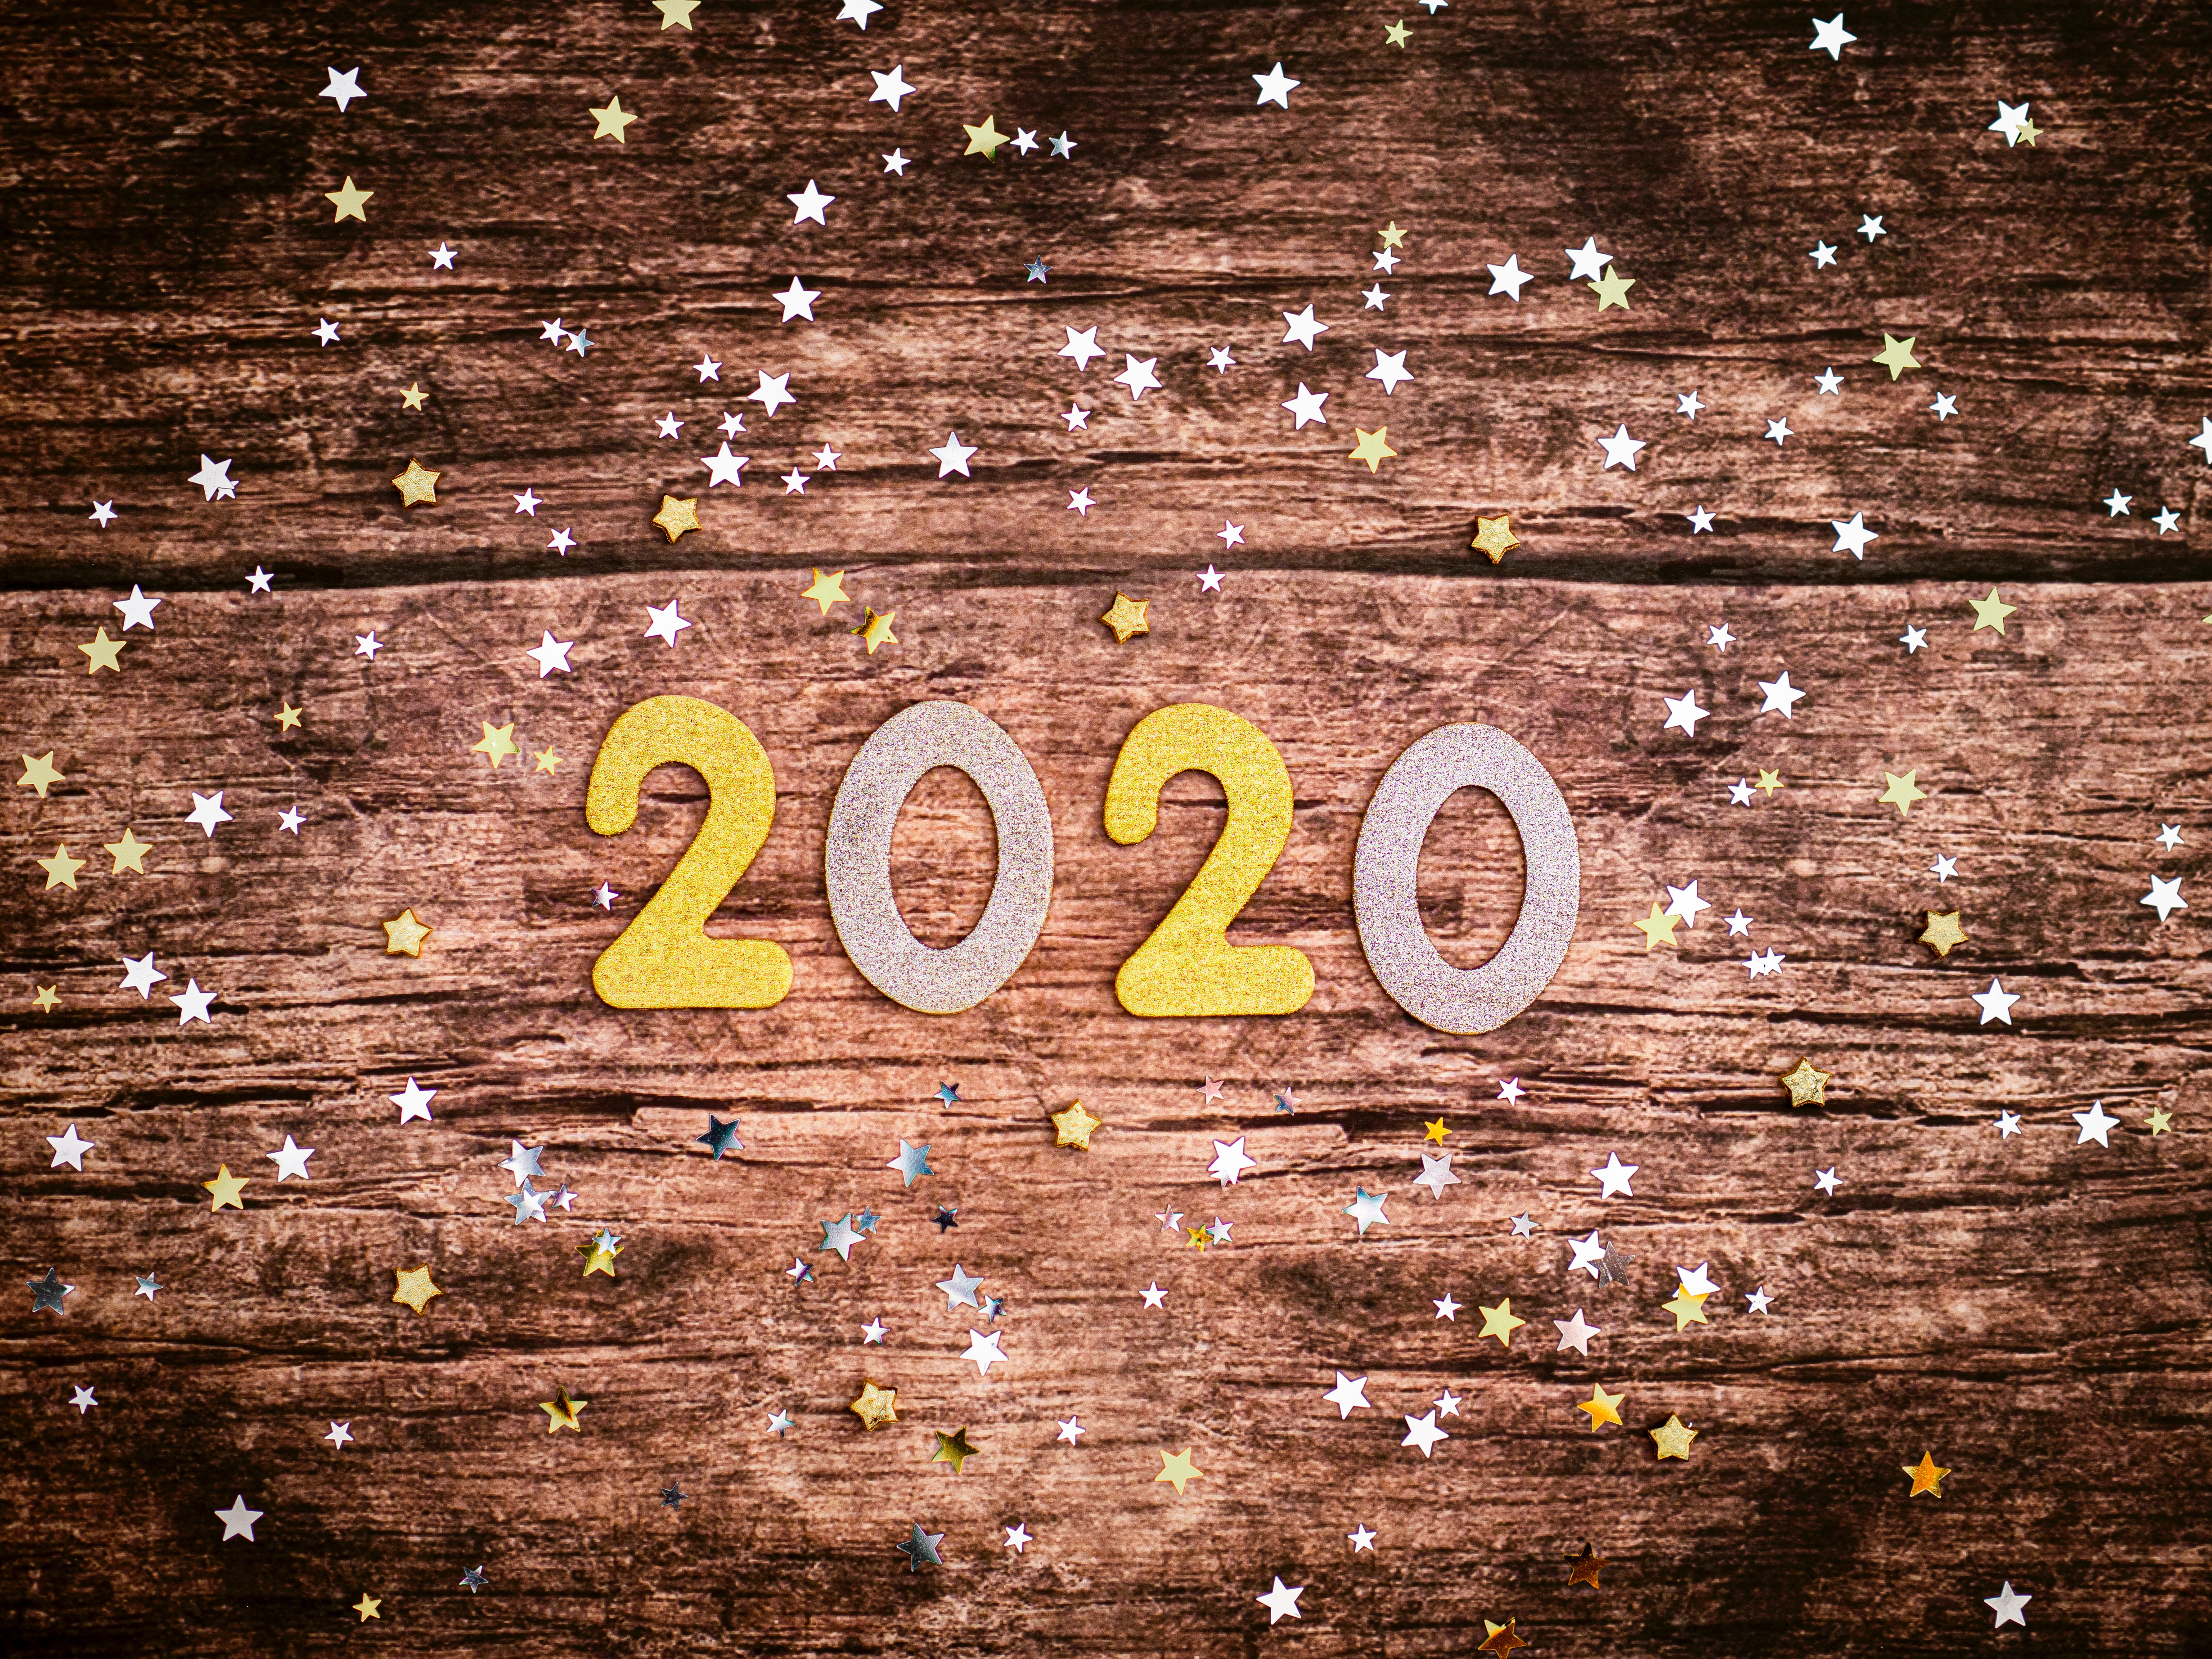 2020 image by Jamie Street on Unsplash